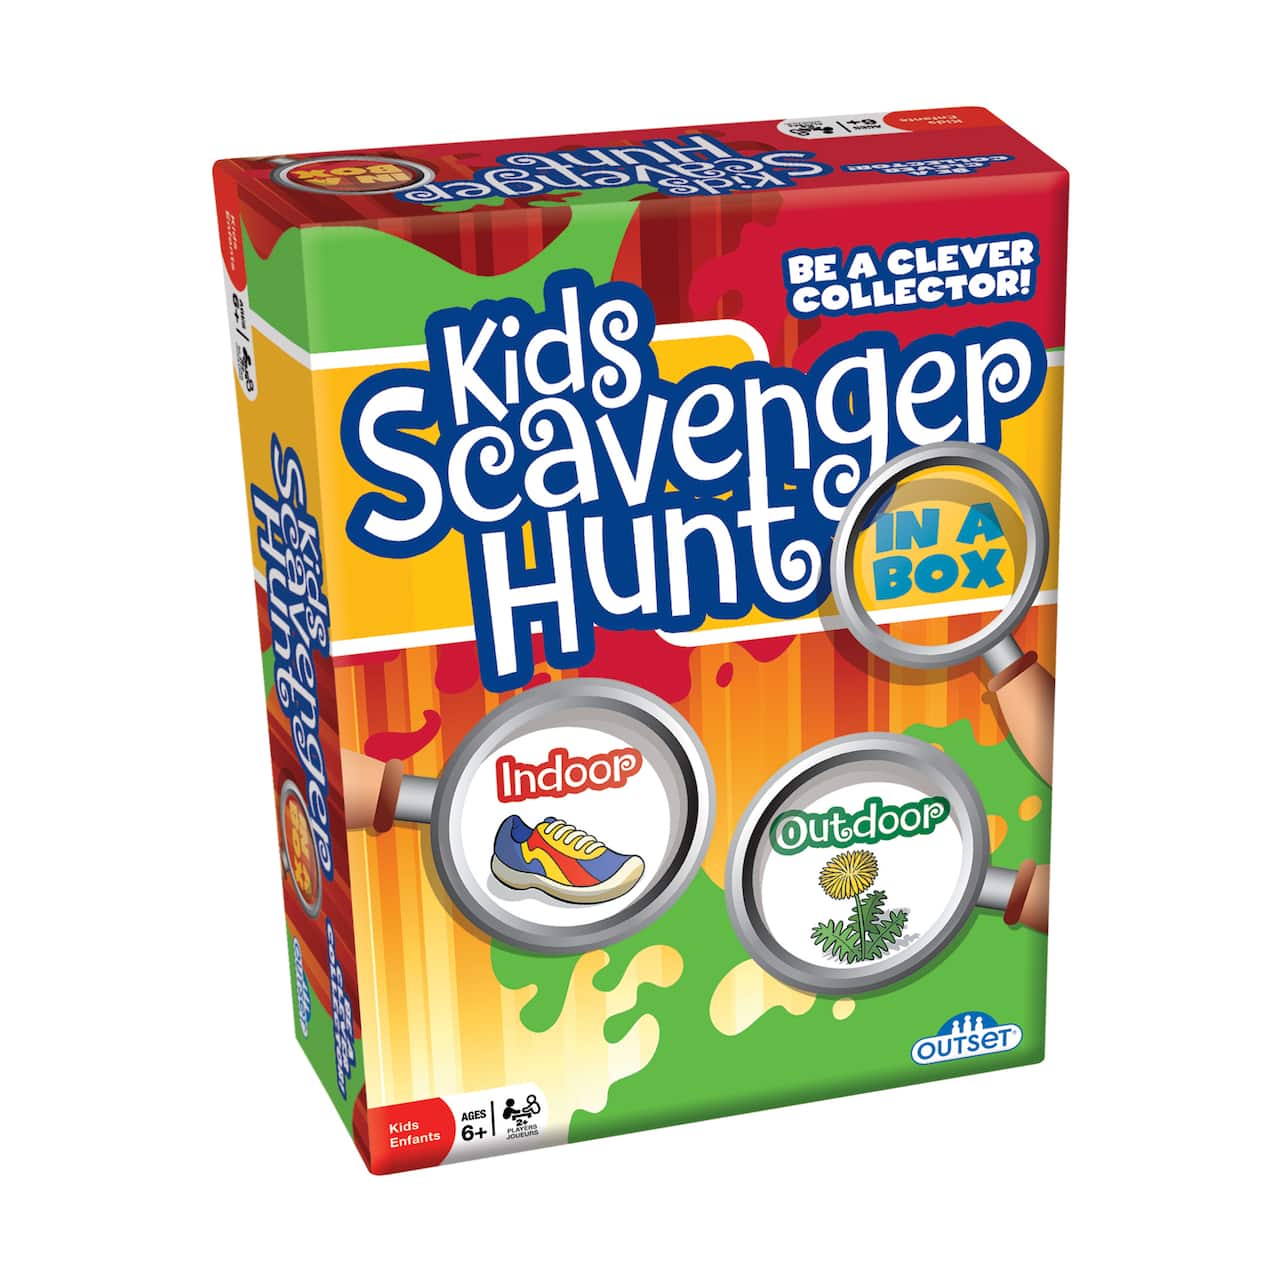 Kids Scavenger Hunt in a Box Game